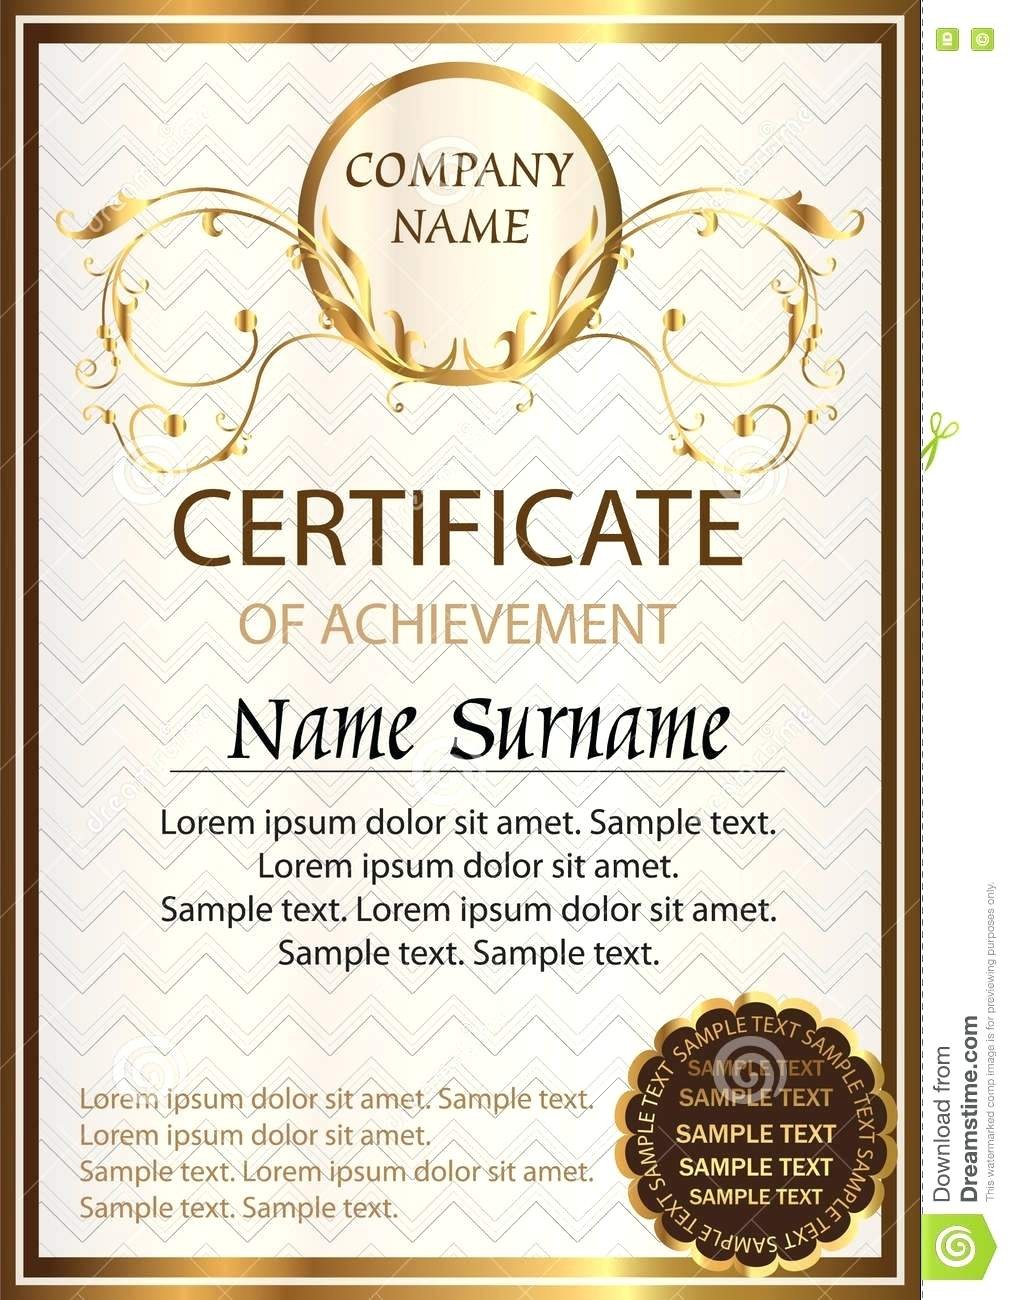 Nra Certificate Template carlynstudio.us